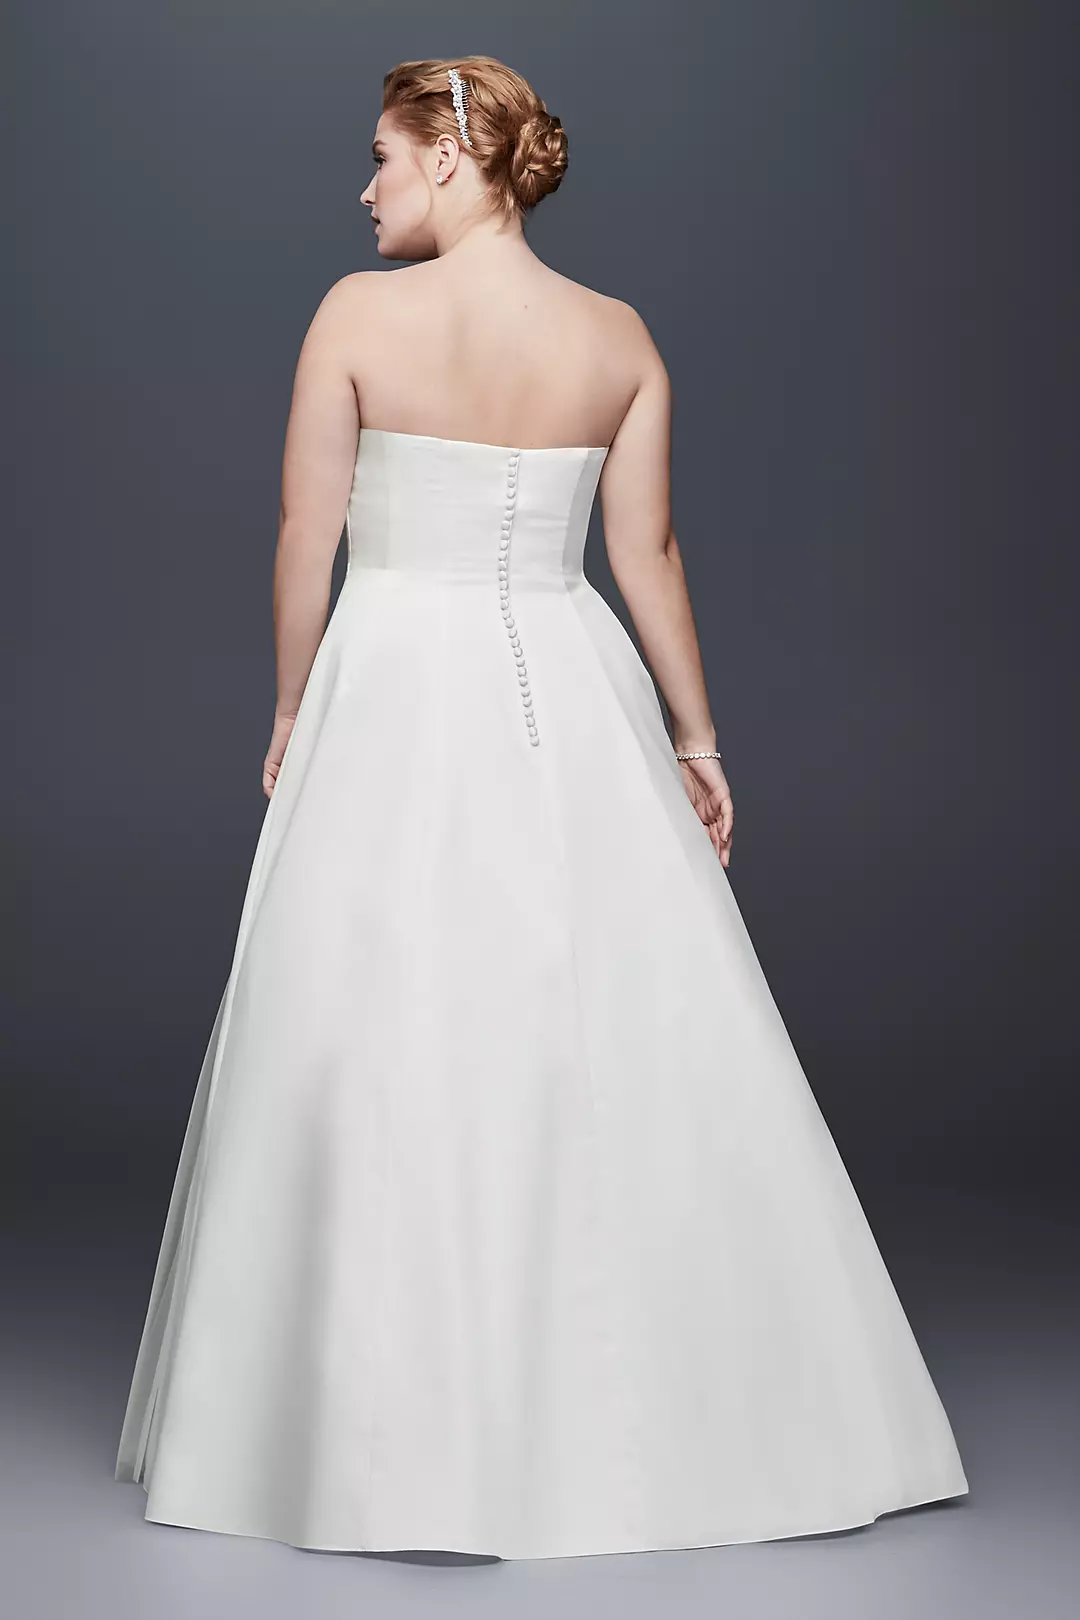 Satin Plus Size A-Line Wedding Dress with Applique Image 2